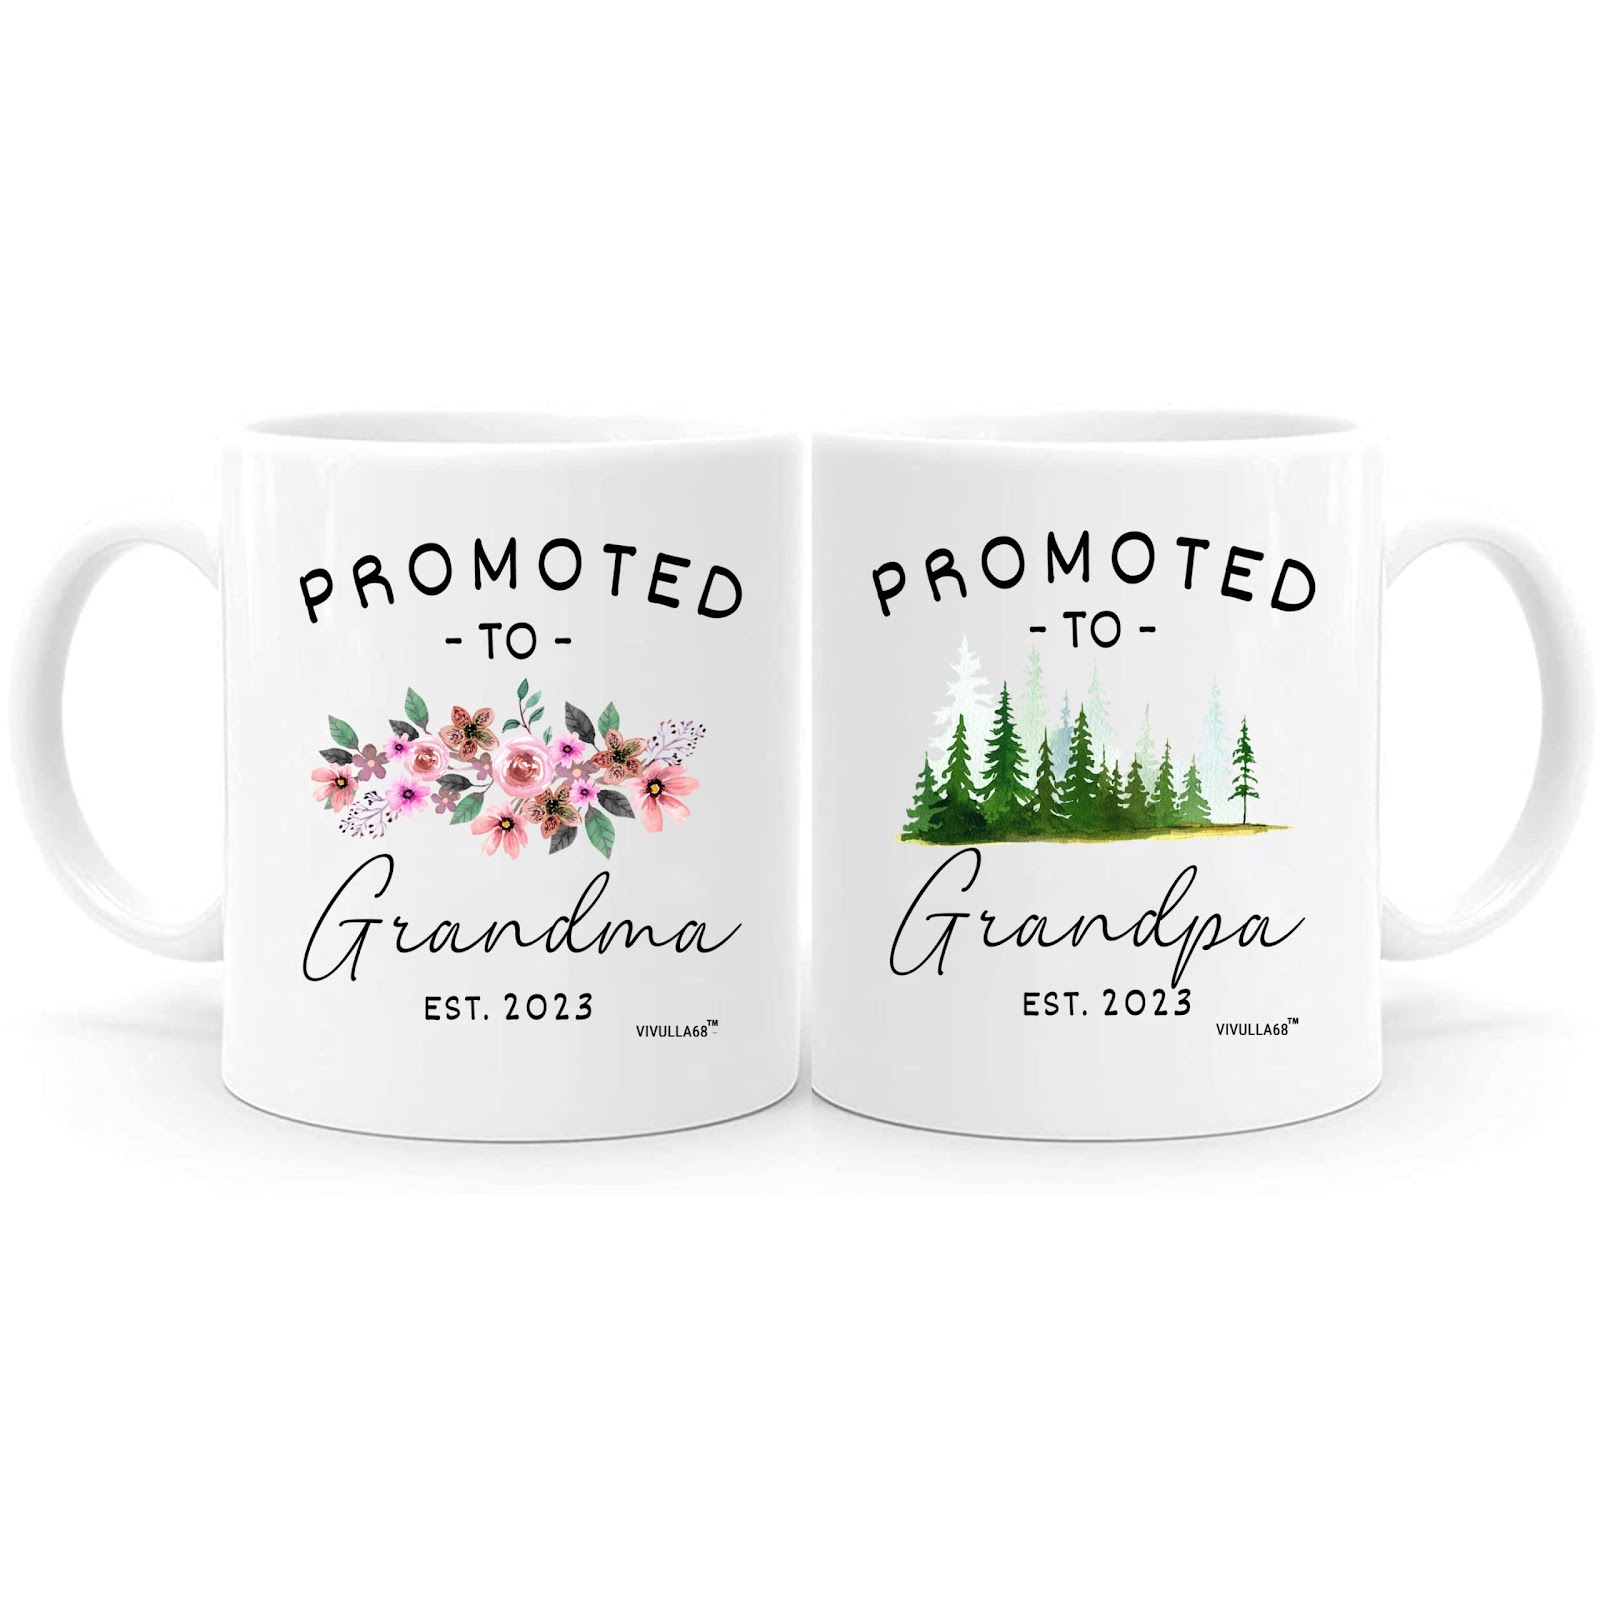 Vivulla68 Promoted To Grandparents Grandma And Grandpa 2023 Mugs